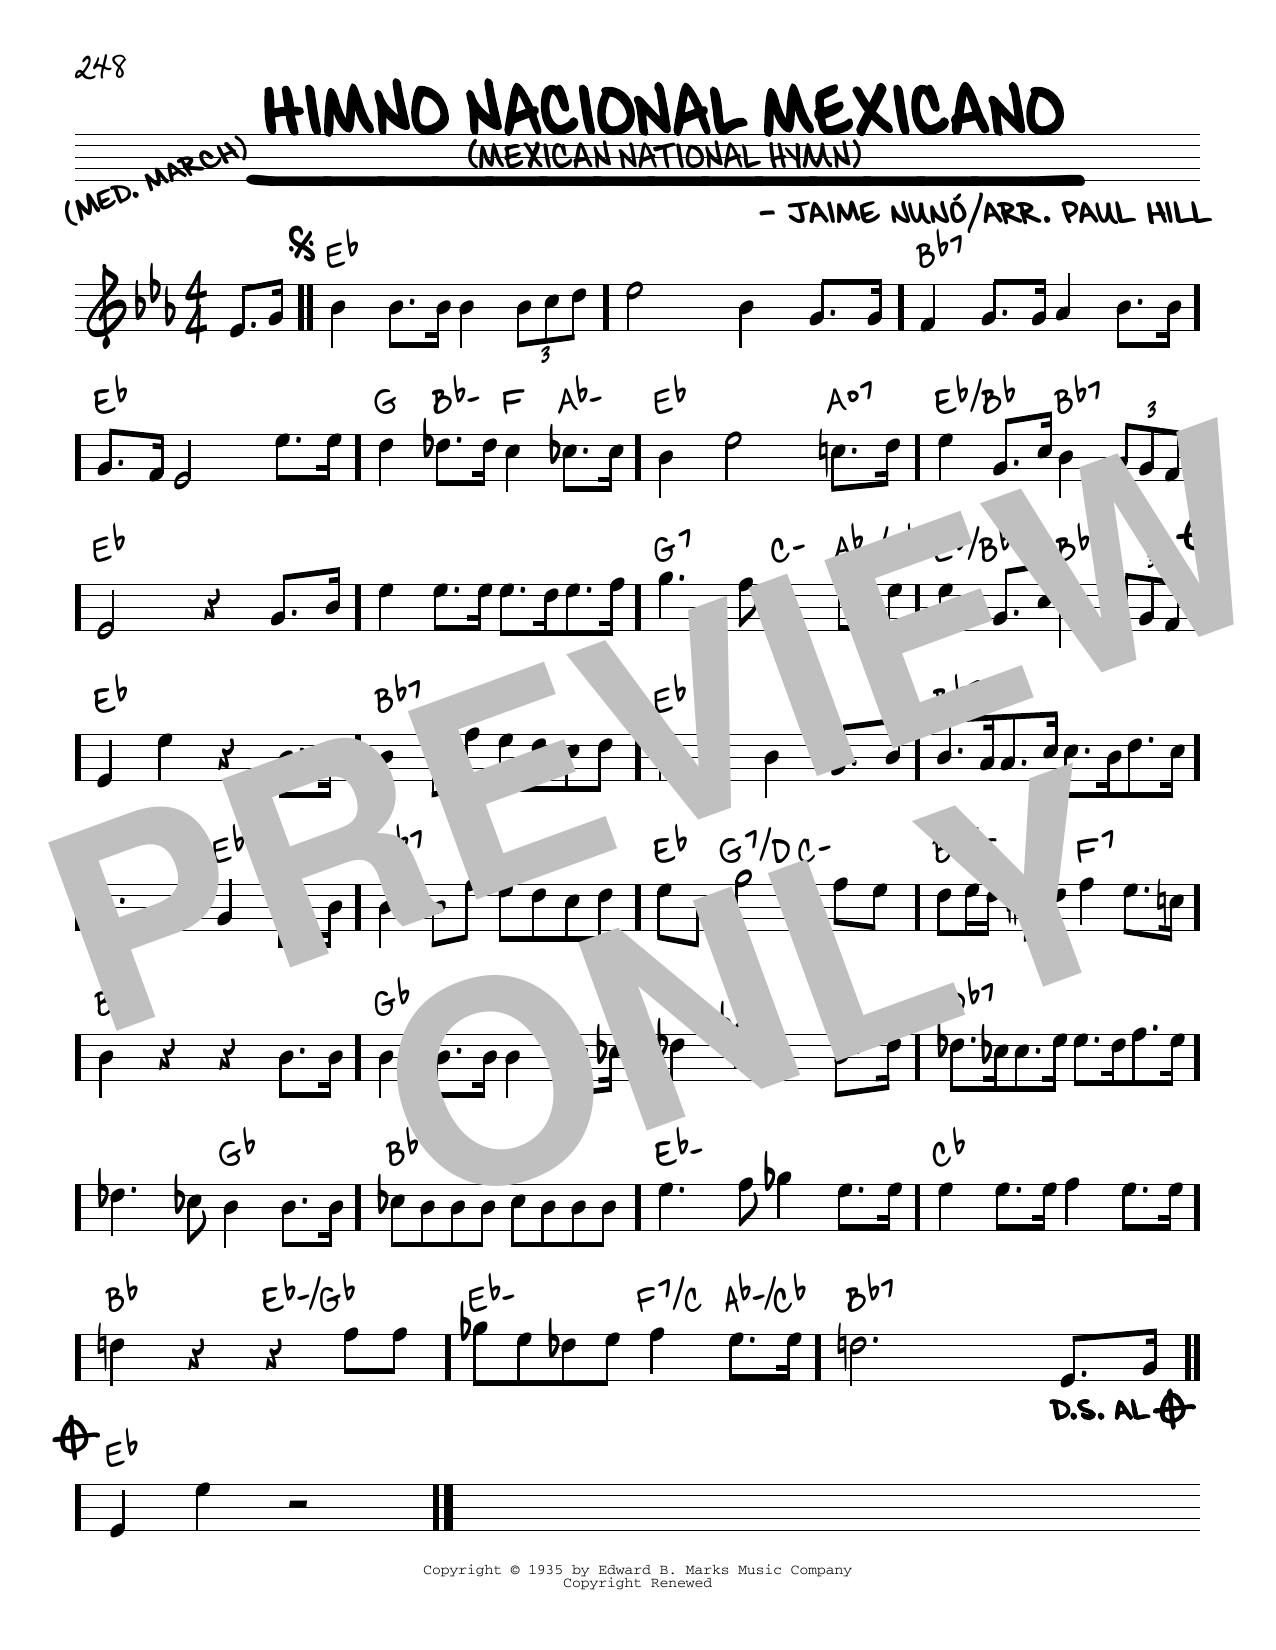 Jaime Nuno Himno Nacional Mexicano (Mexican National Hymn) Sheet Music Notes & Chords for Piano, Vocal & Guitar Chords (Right-Hand Melody) - Download or Print PDF